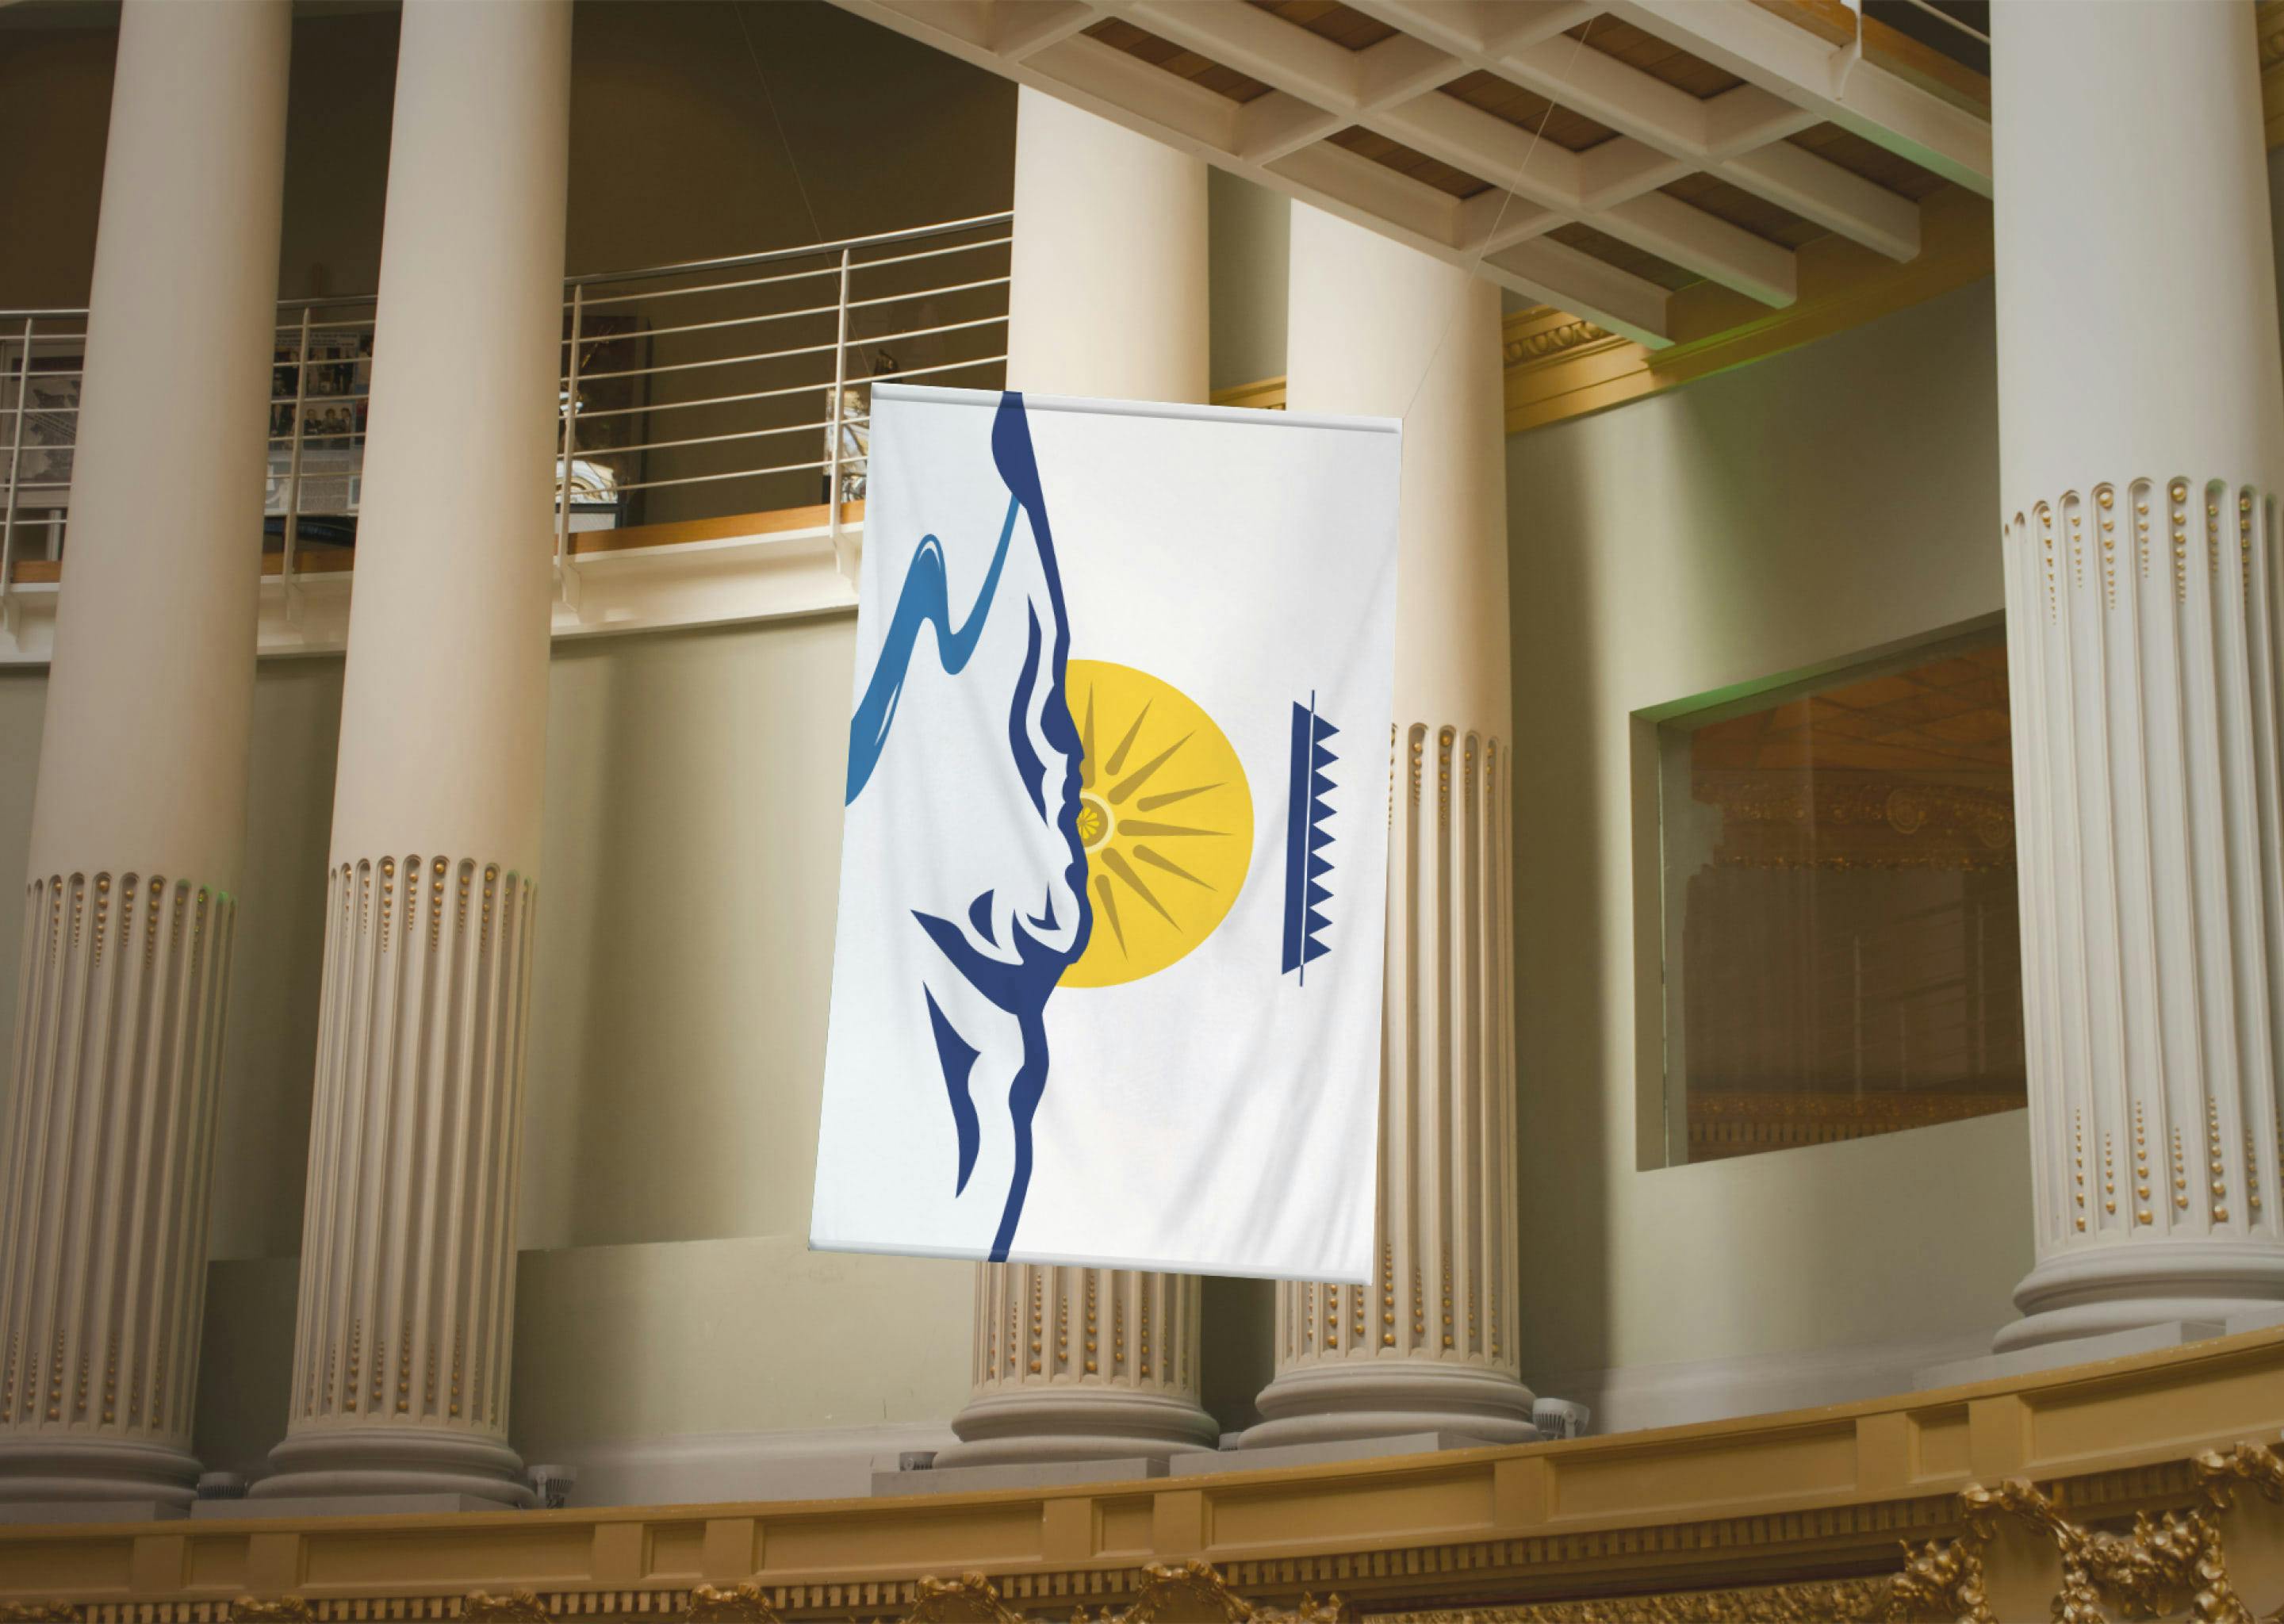 Tuzi Flag & Emblem